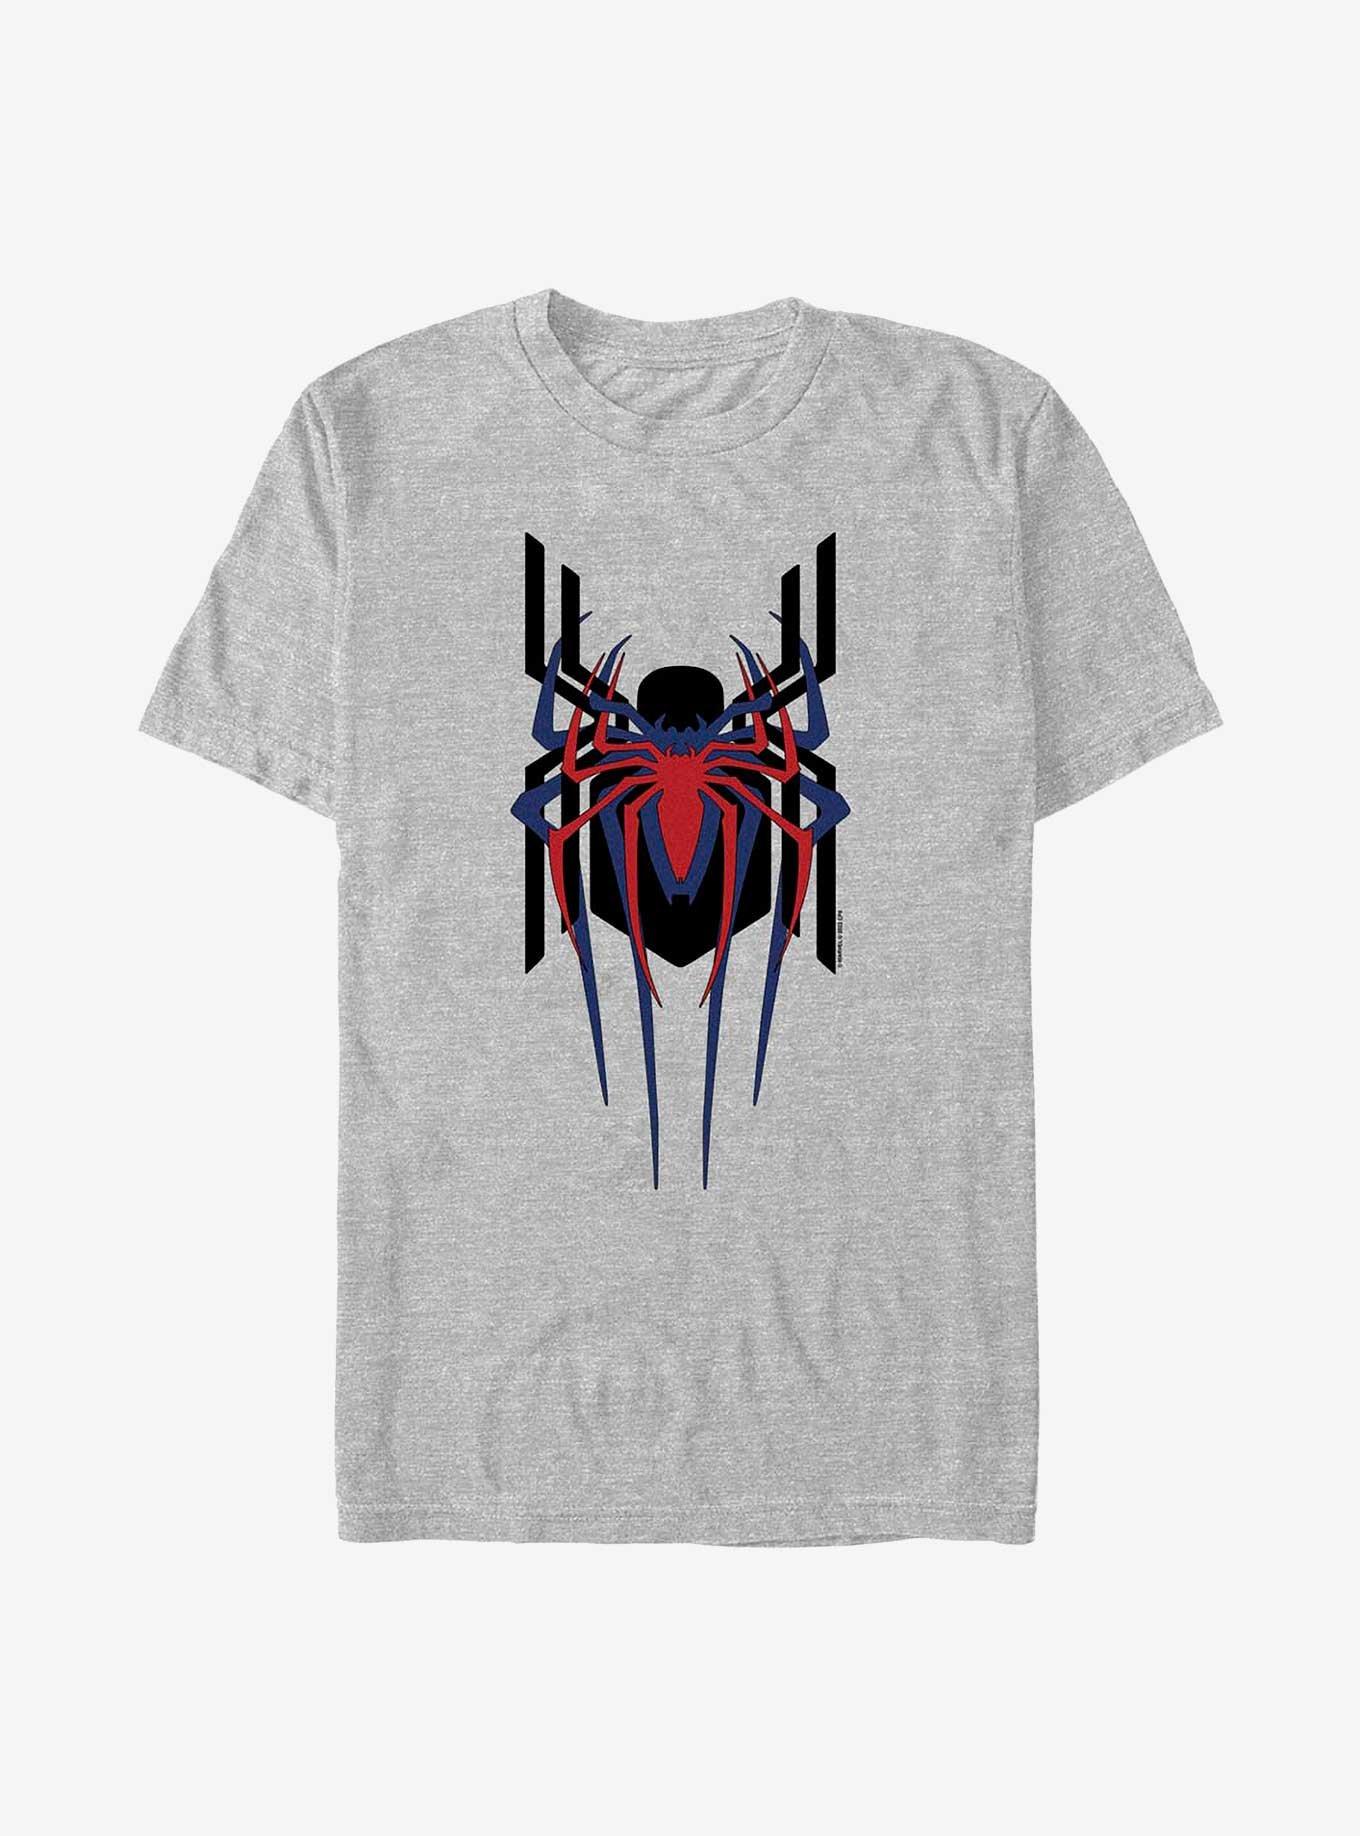 Spider-Man T-Shirt BoxLunch Emblem Triple Marvel GREY - Stacked |